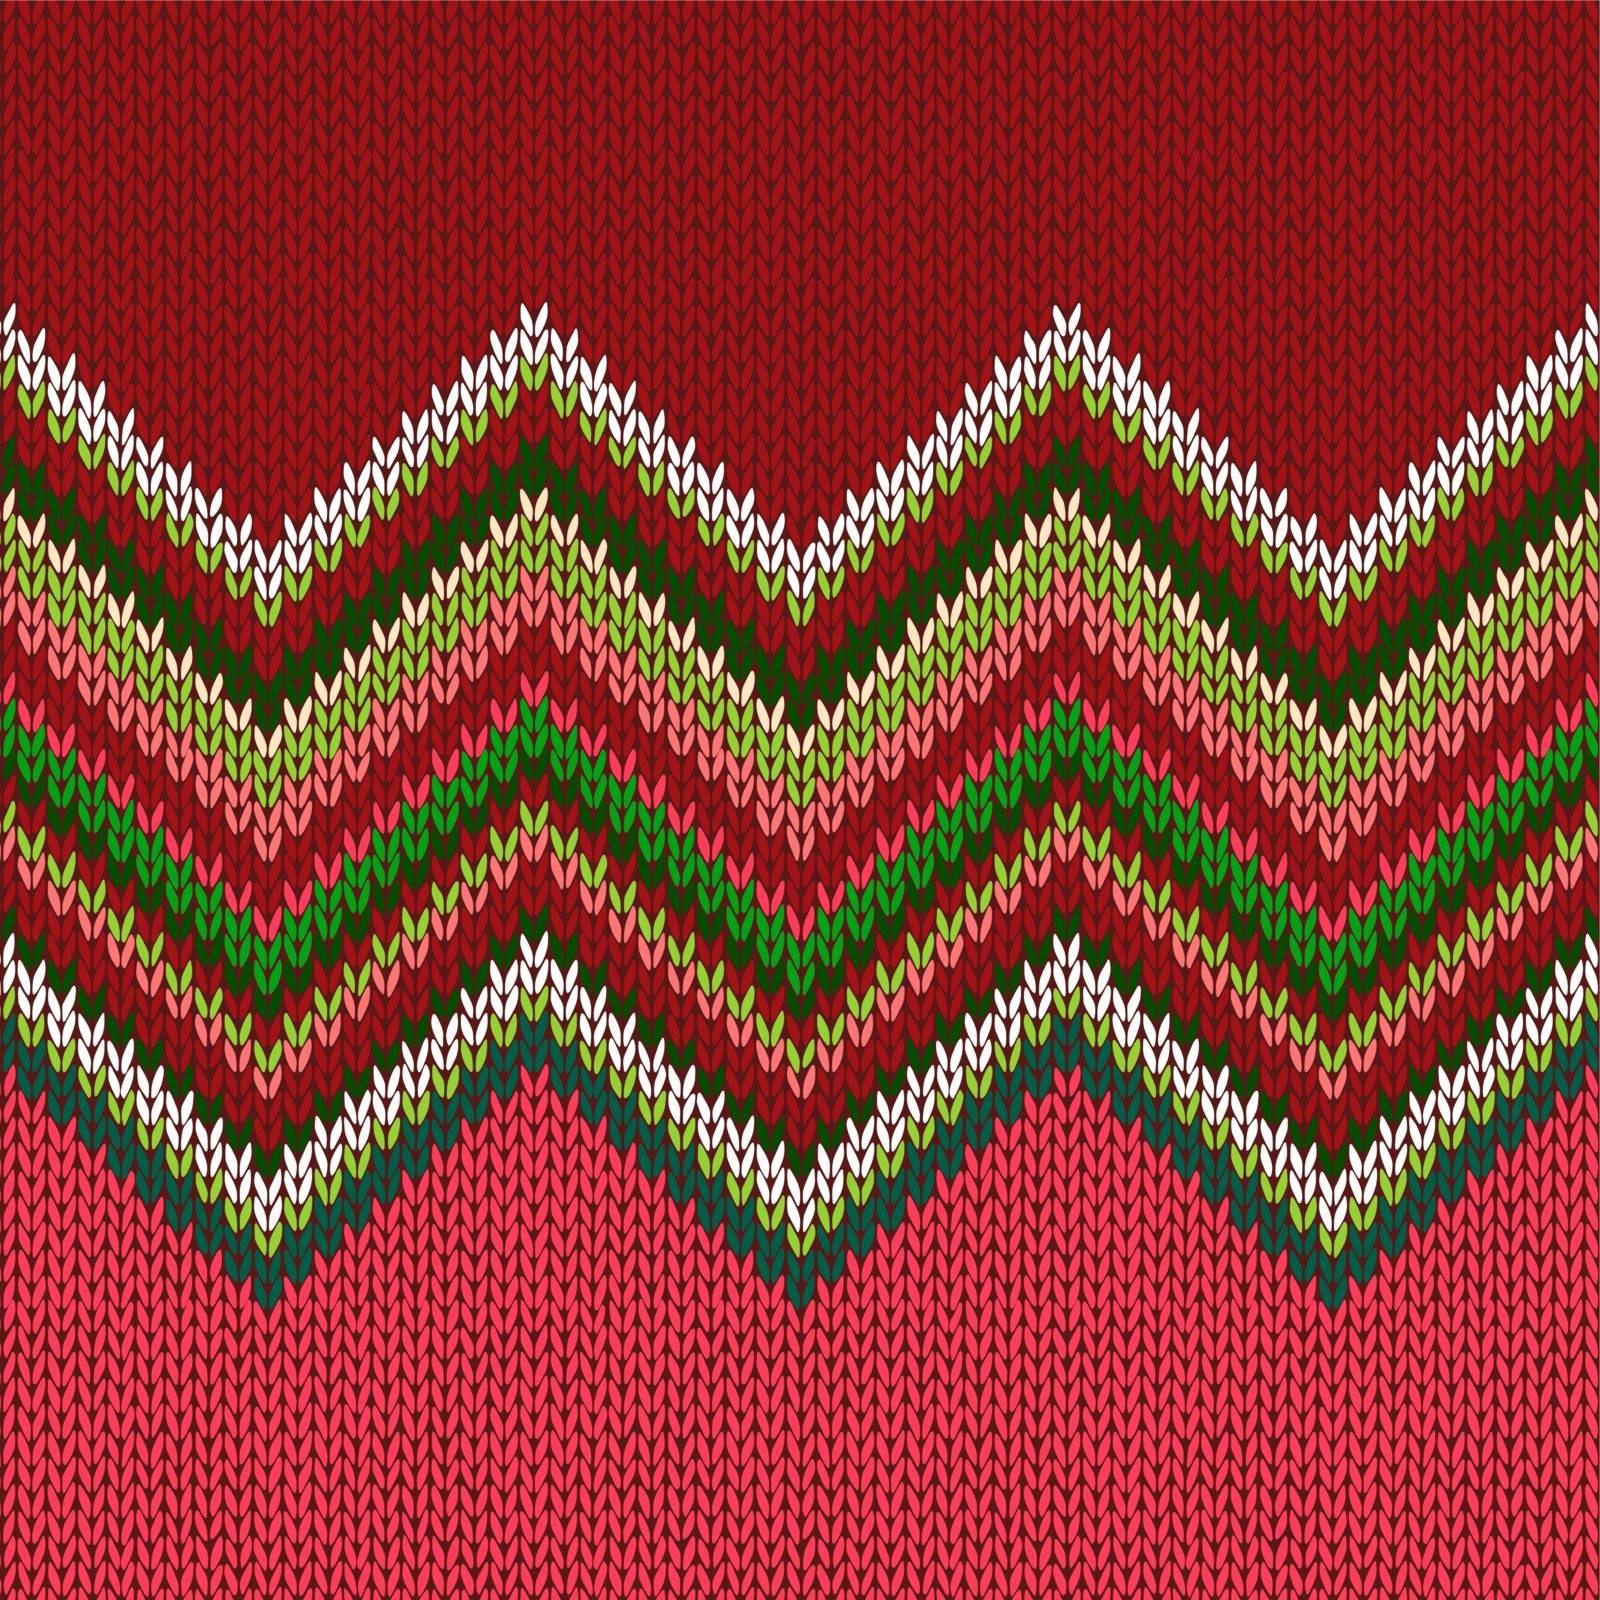 Knitted Seamless Fabric Pattern